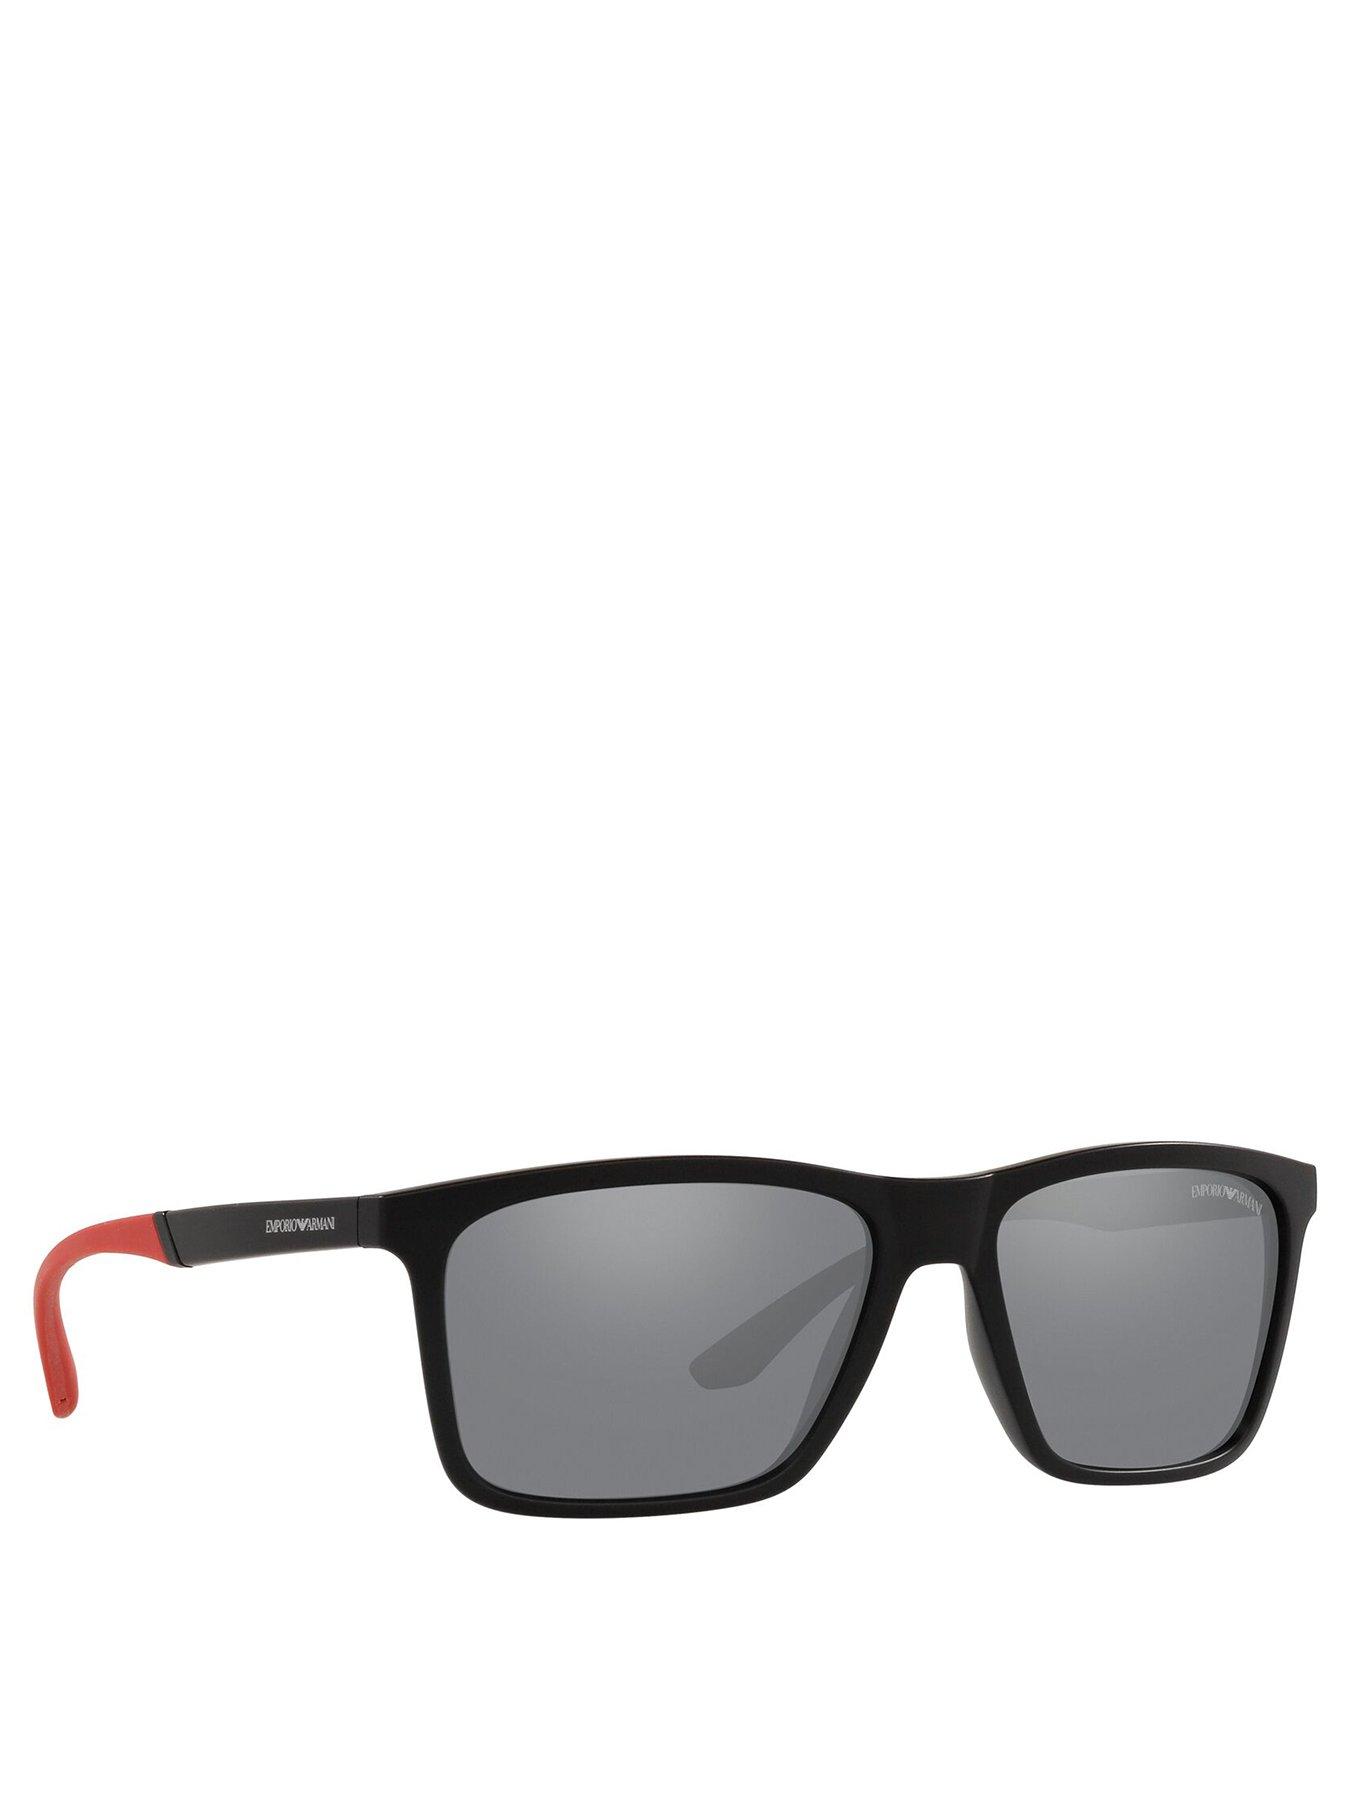 Accessories Rectangular Frame Sunglasses - Black